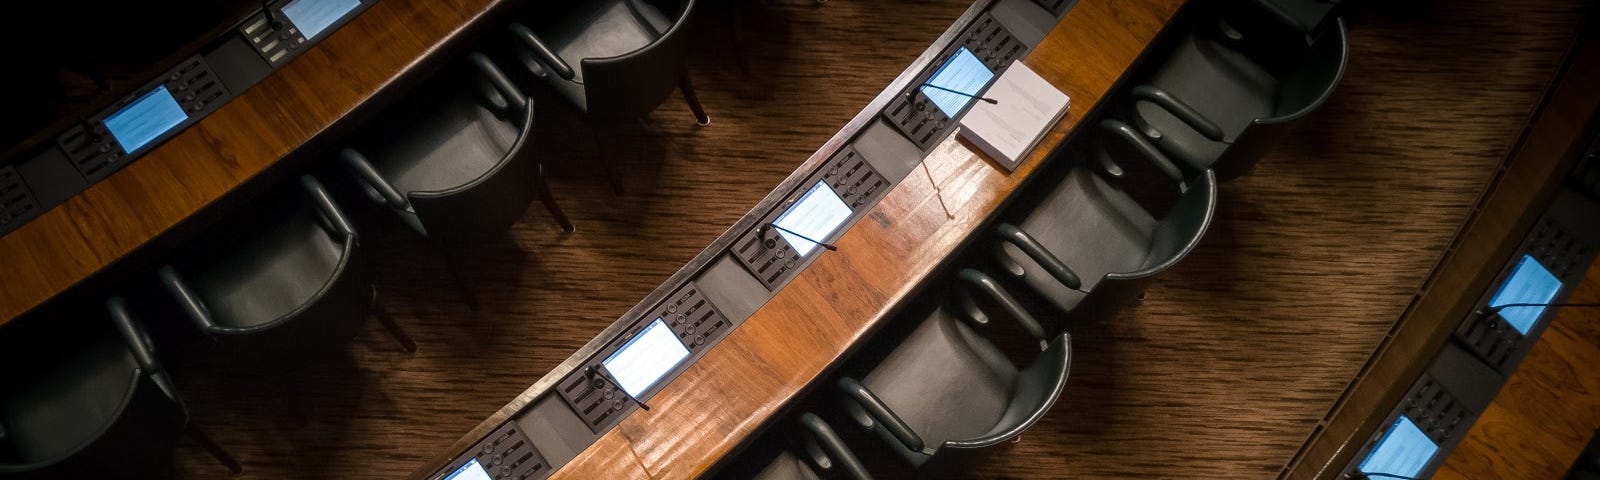 Empty chairs in legislative chamber